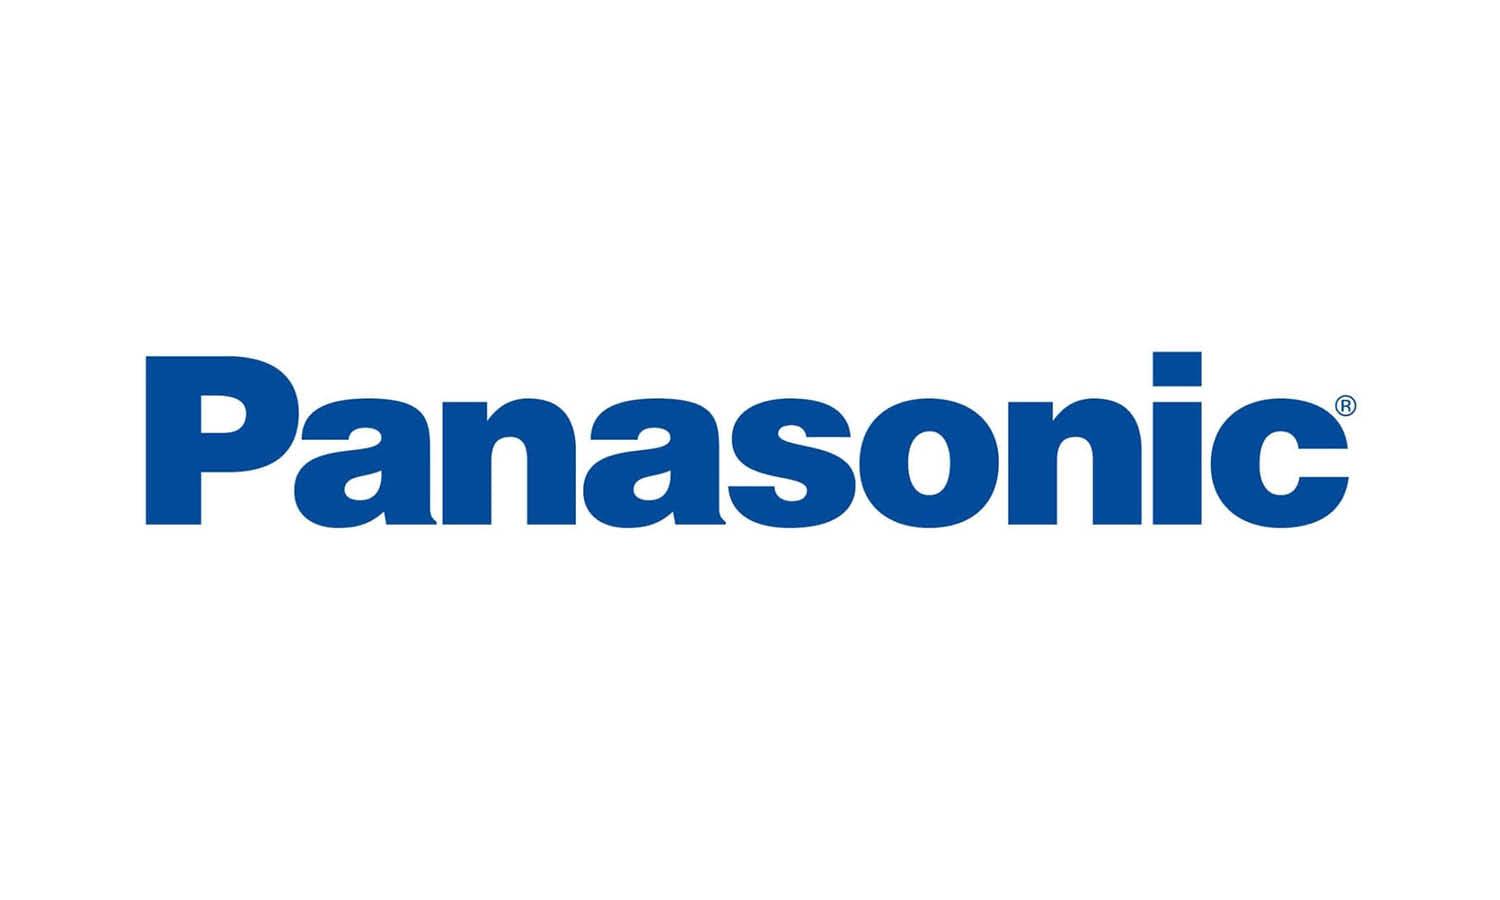 Panasonic Logo Design: History u0026 Evolution